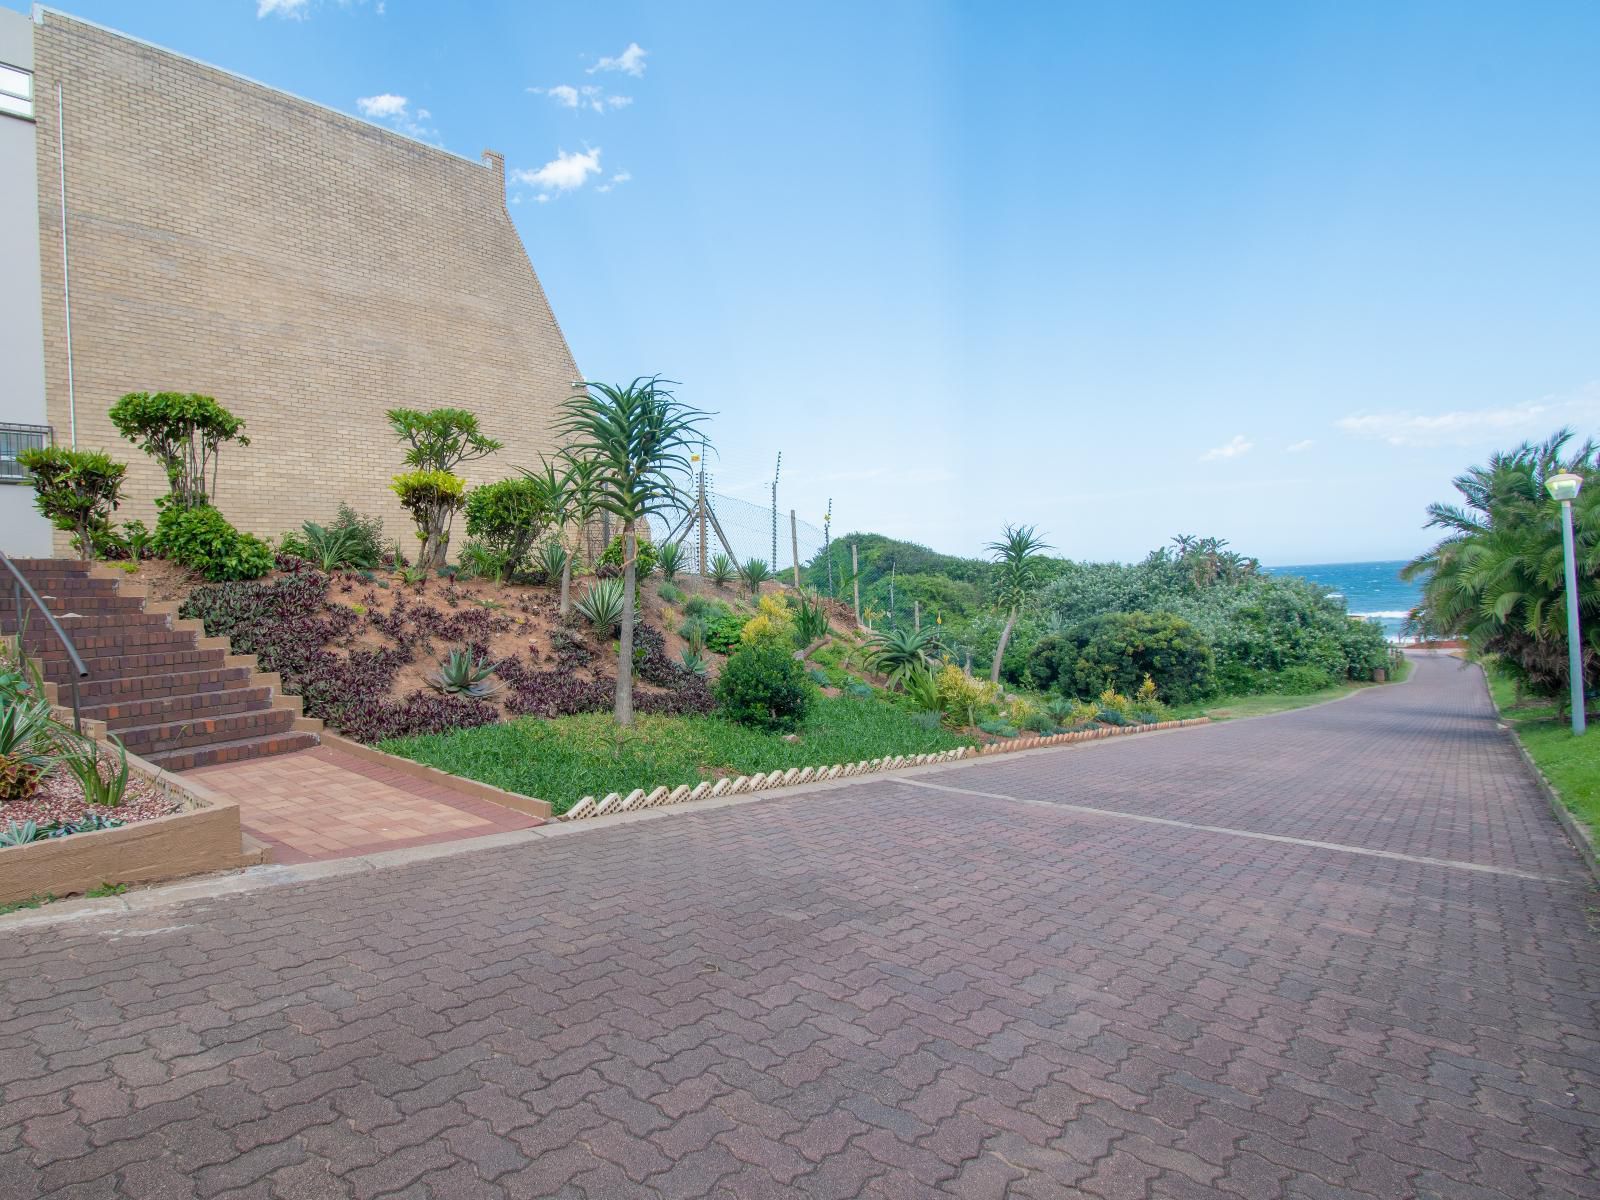 40 Hawaan View Umhlanga Durban Kwazulu Natal South Africa Beach, Nature, Sand, Palm Tree, Plant, Wood, Garden